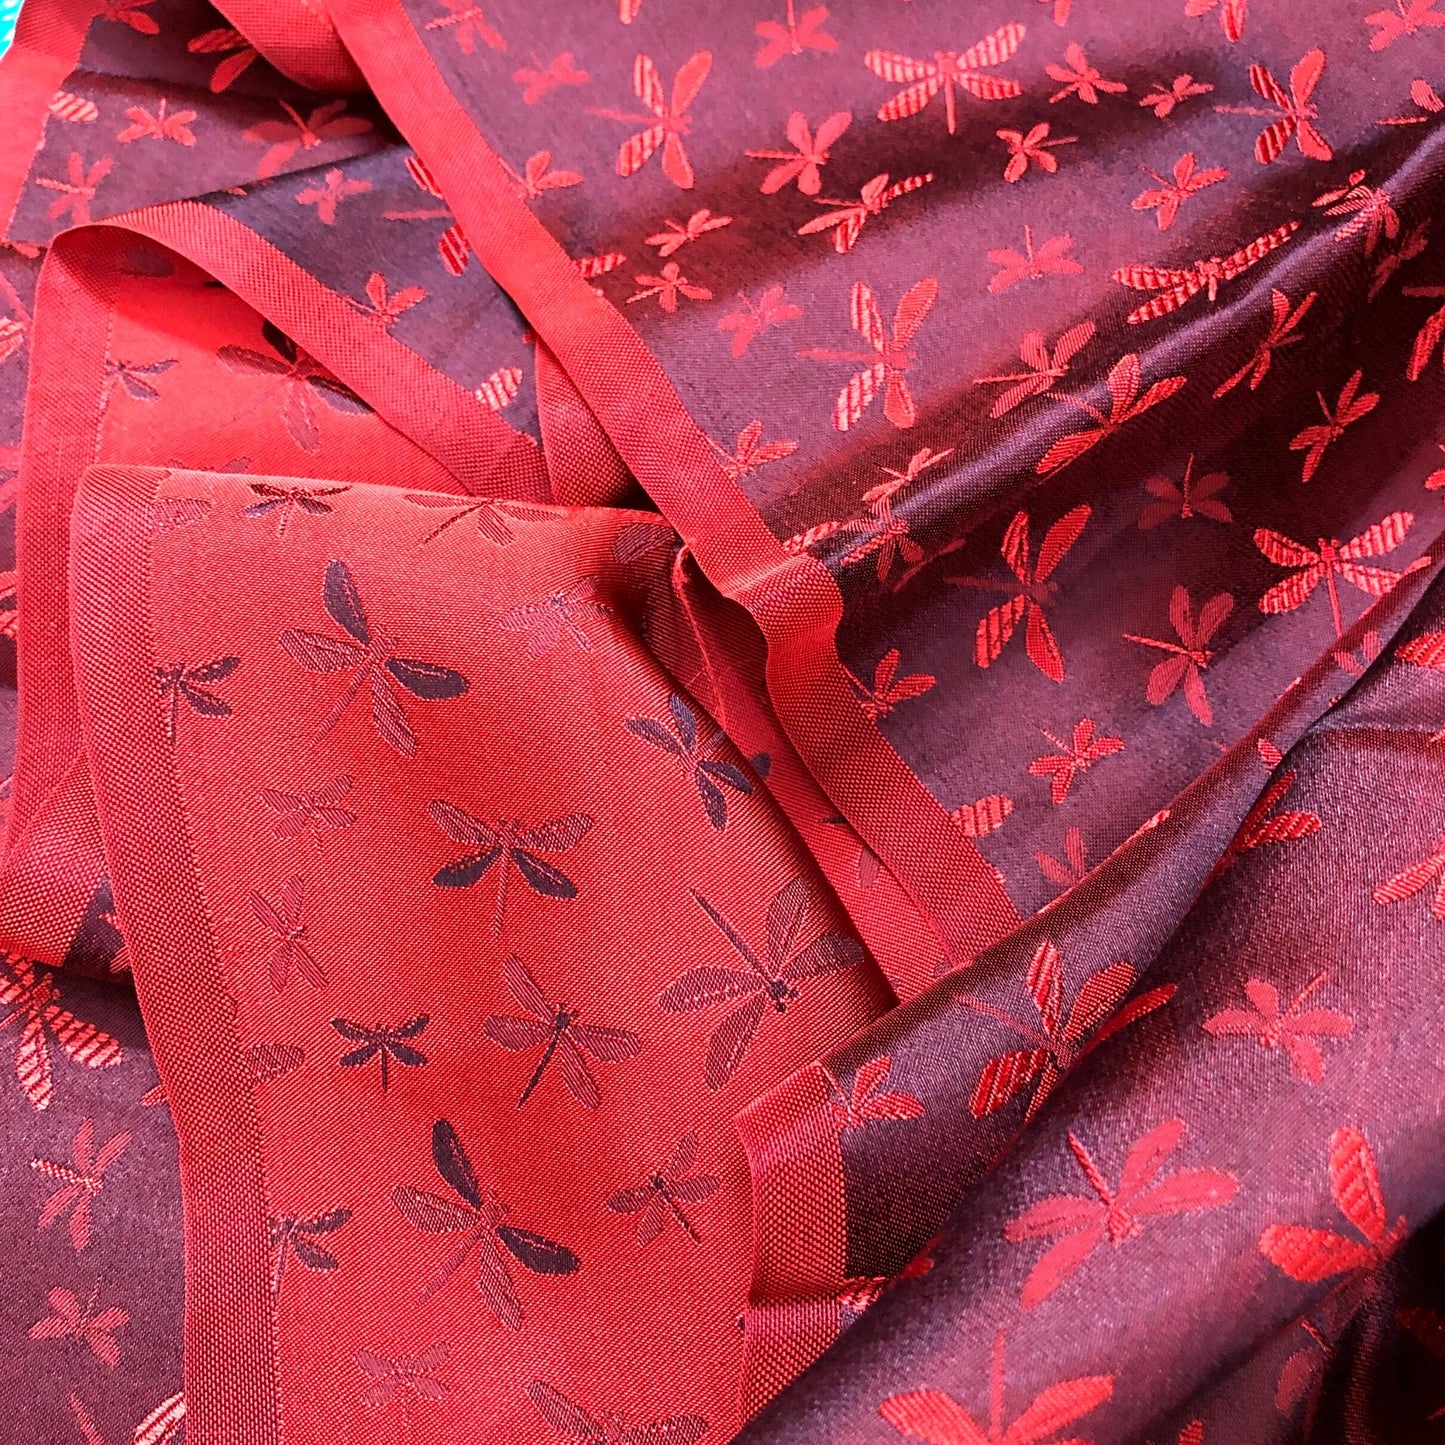 Mulberry Silk Pattern Fabric – Dragonfly Pattern – Silk for Sewing – Red Pattern Silk Fabric